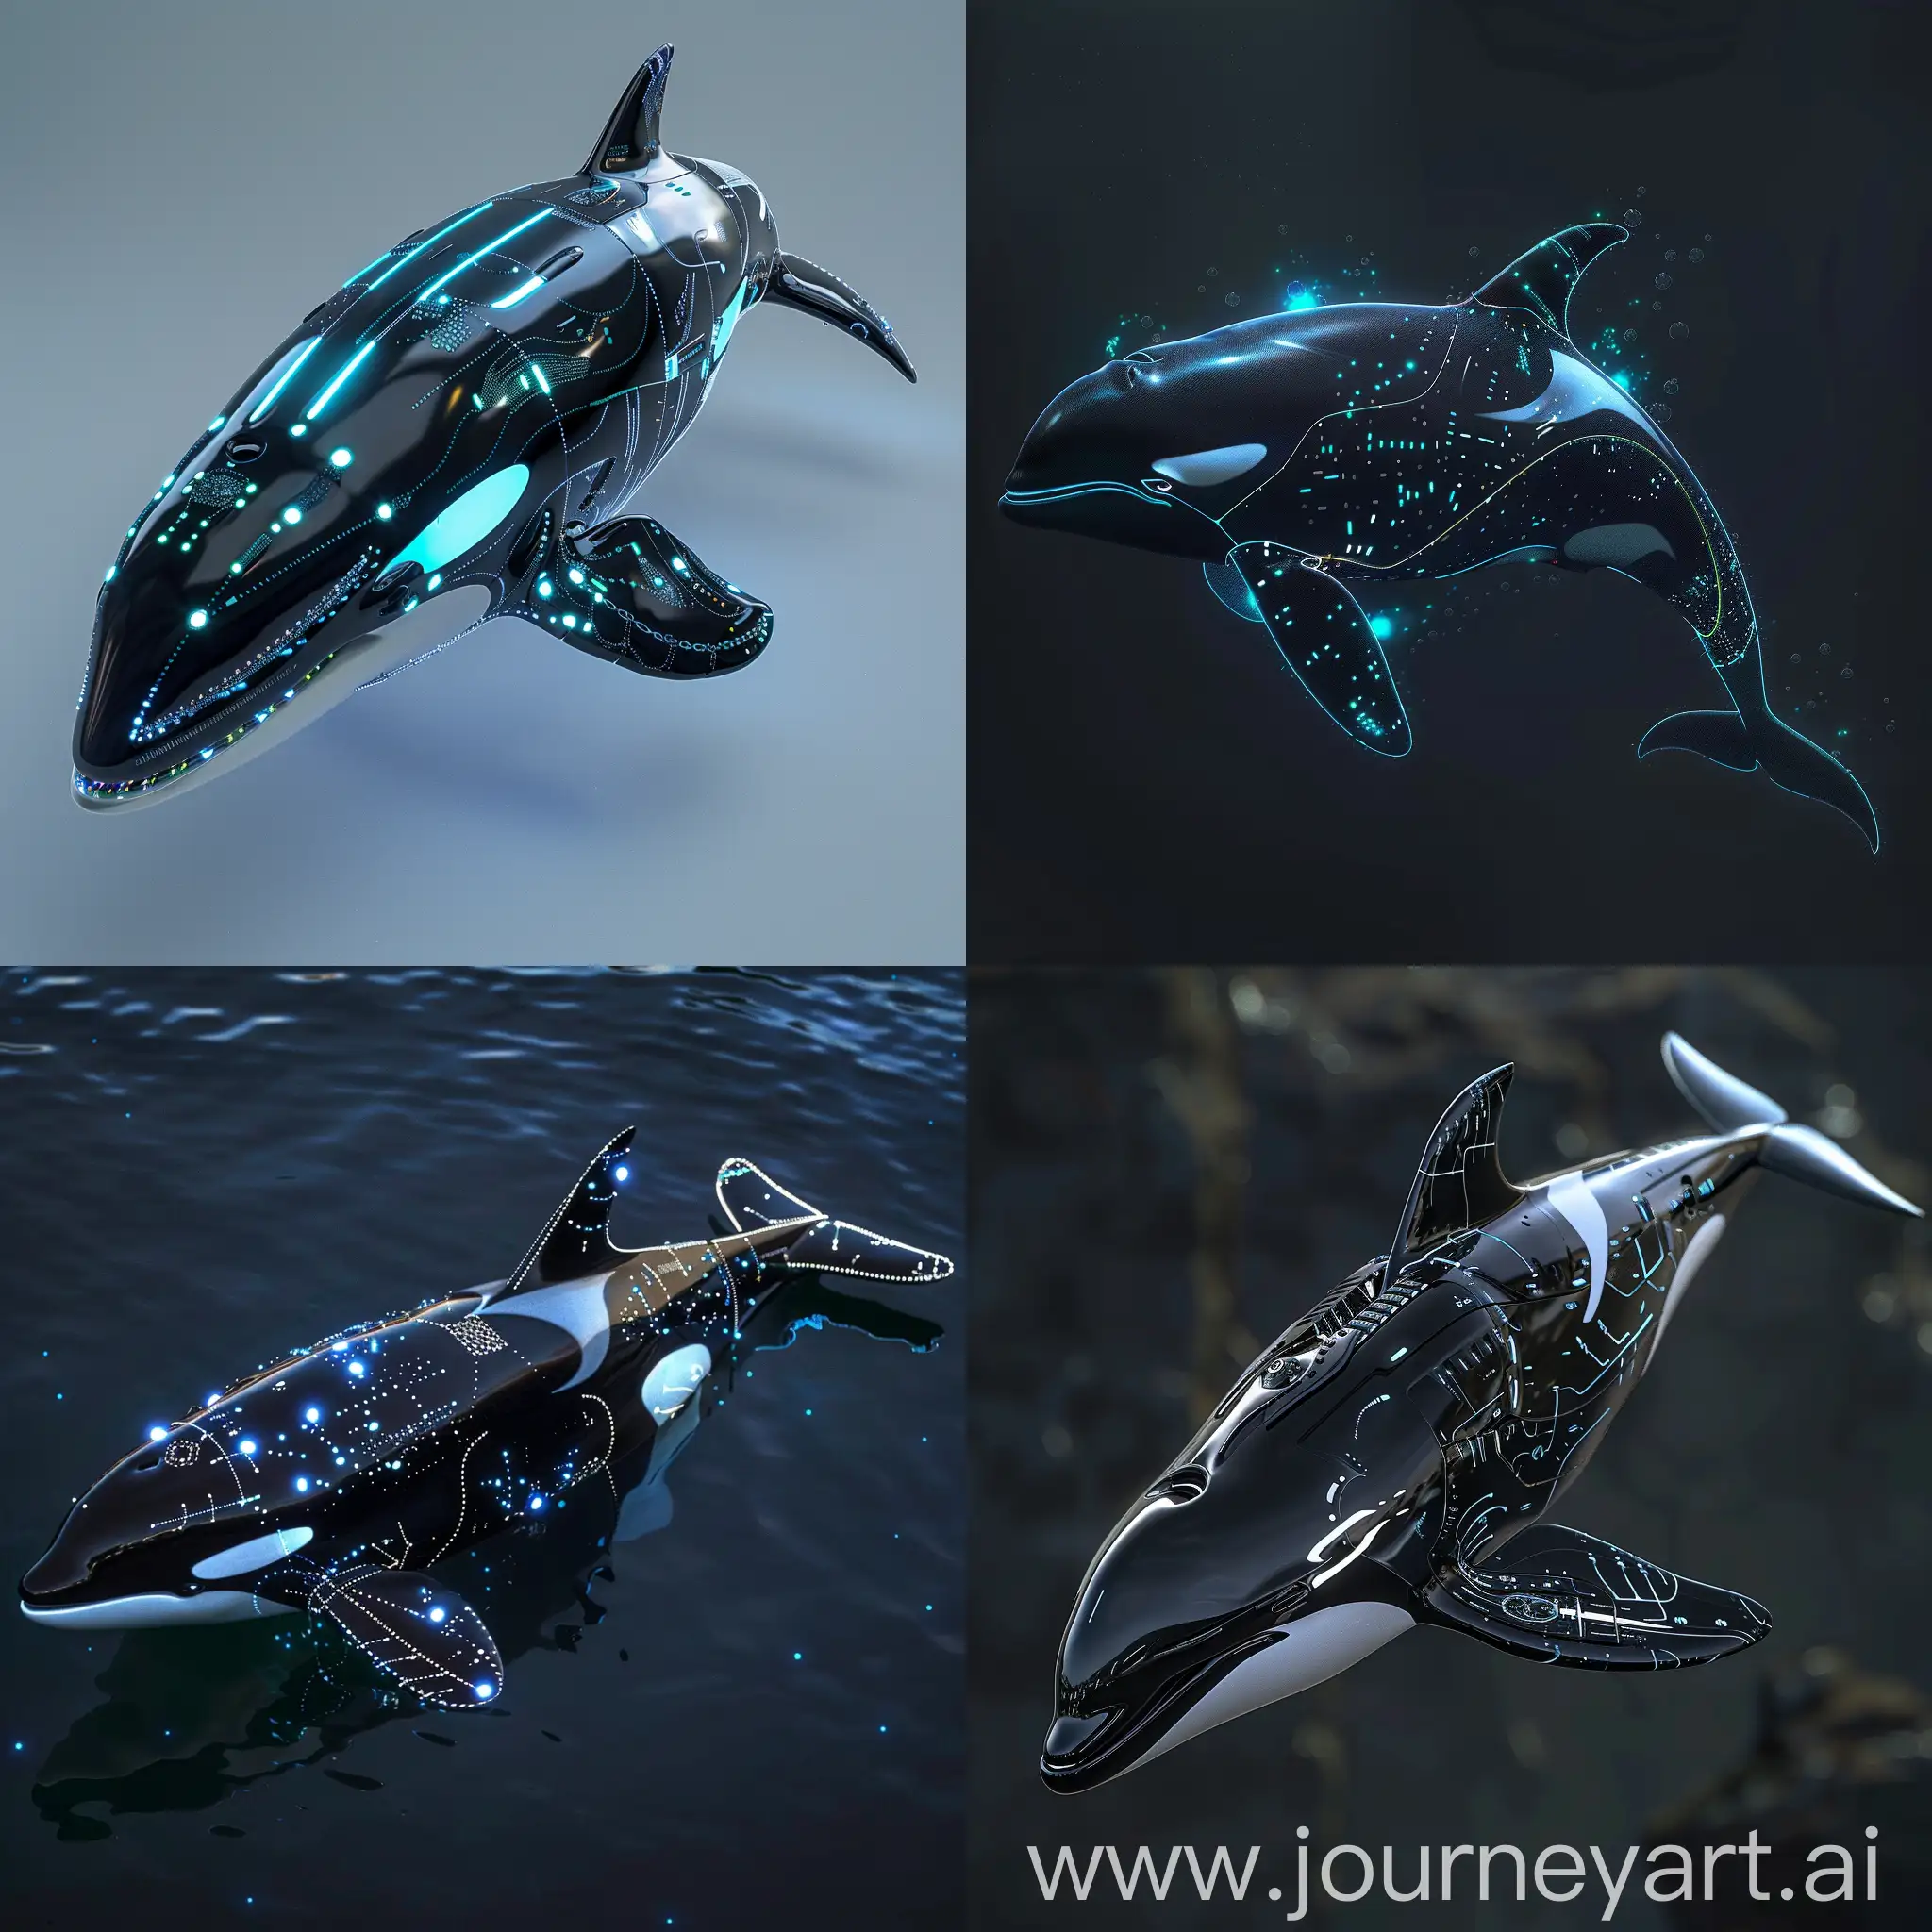 Futuristic-Orca-with-BioMechanical-Fluke-Propulsion-System-and-Bioluminescent-Communication